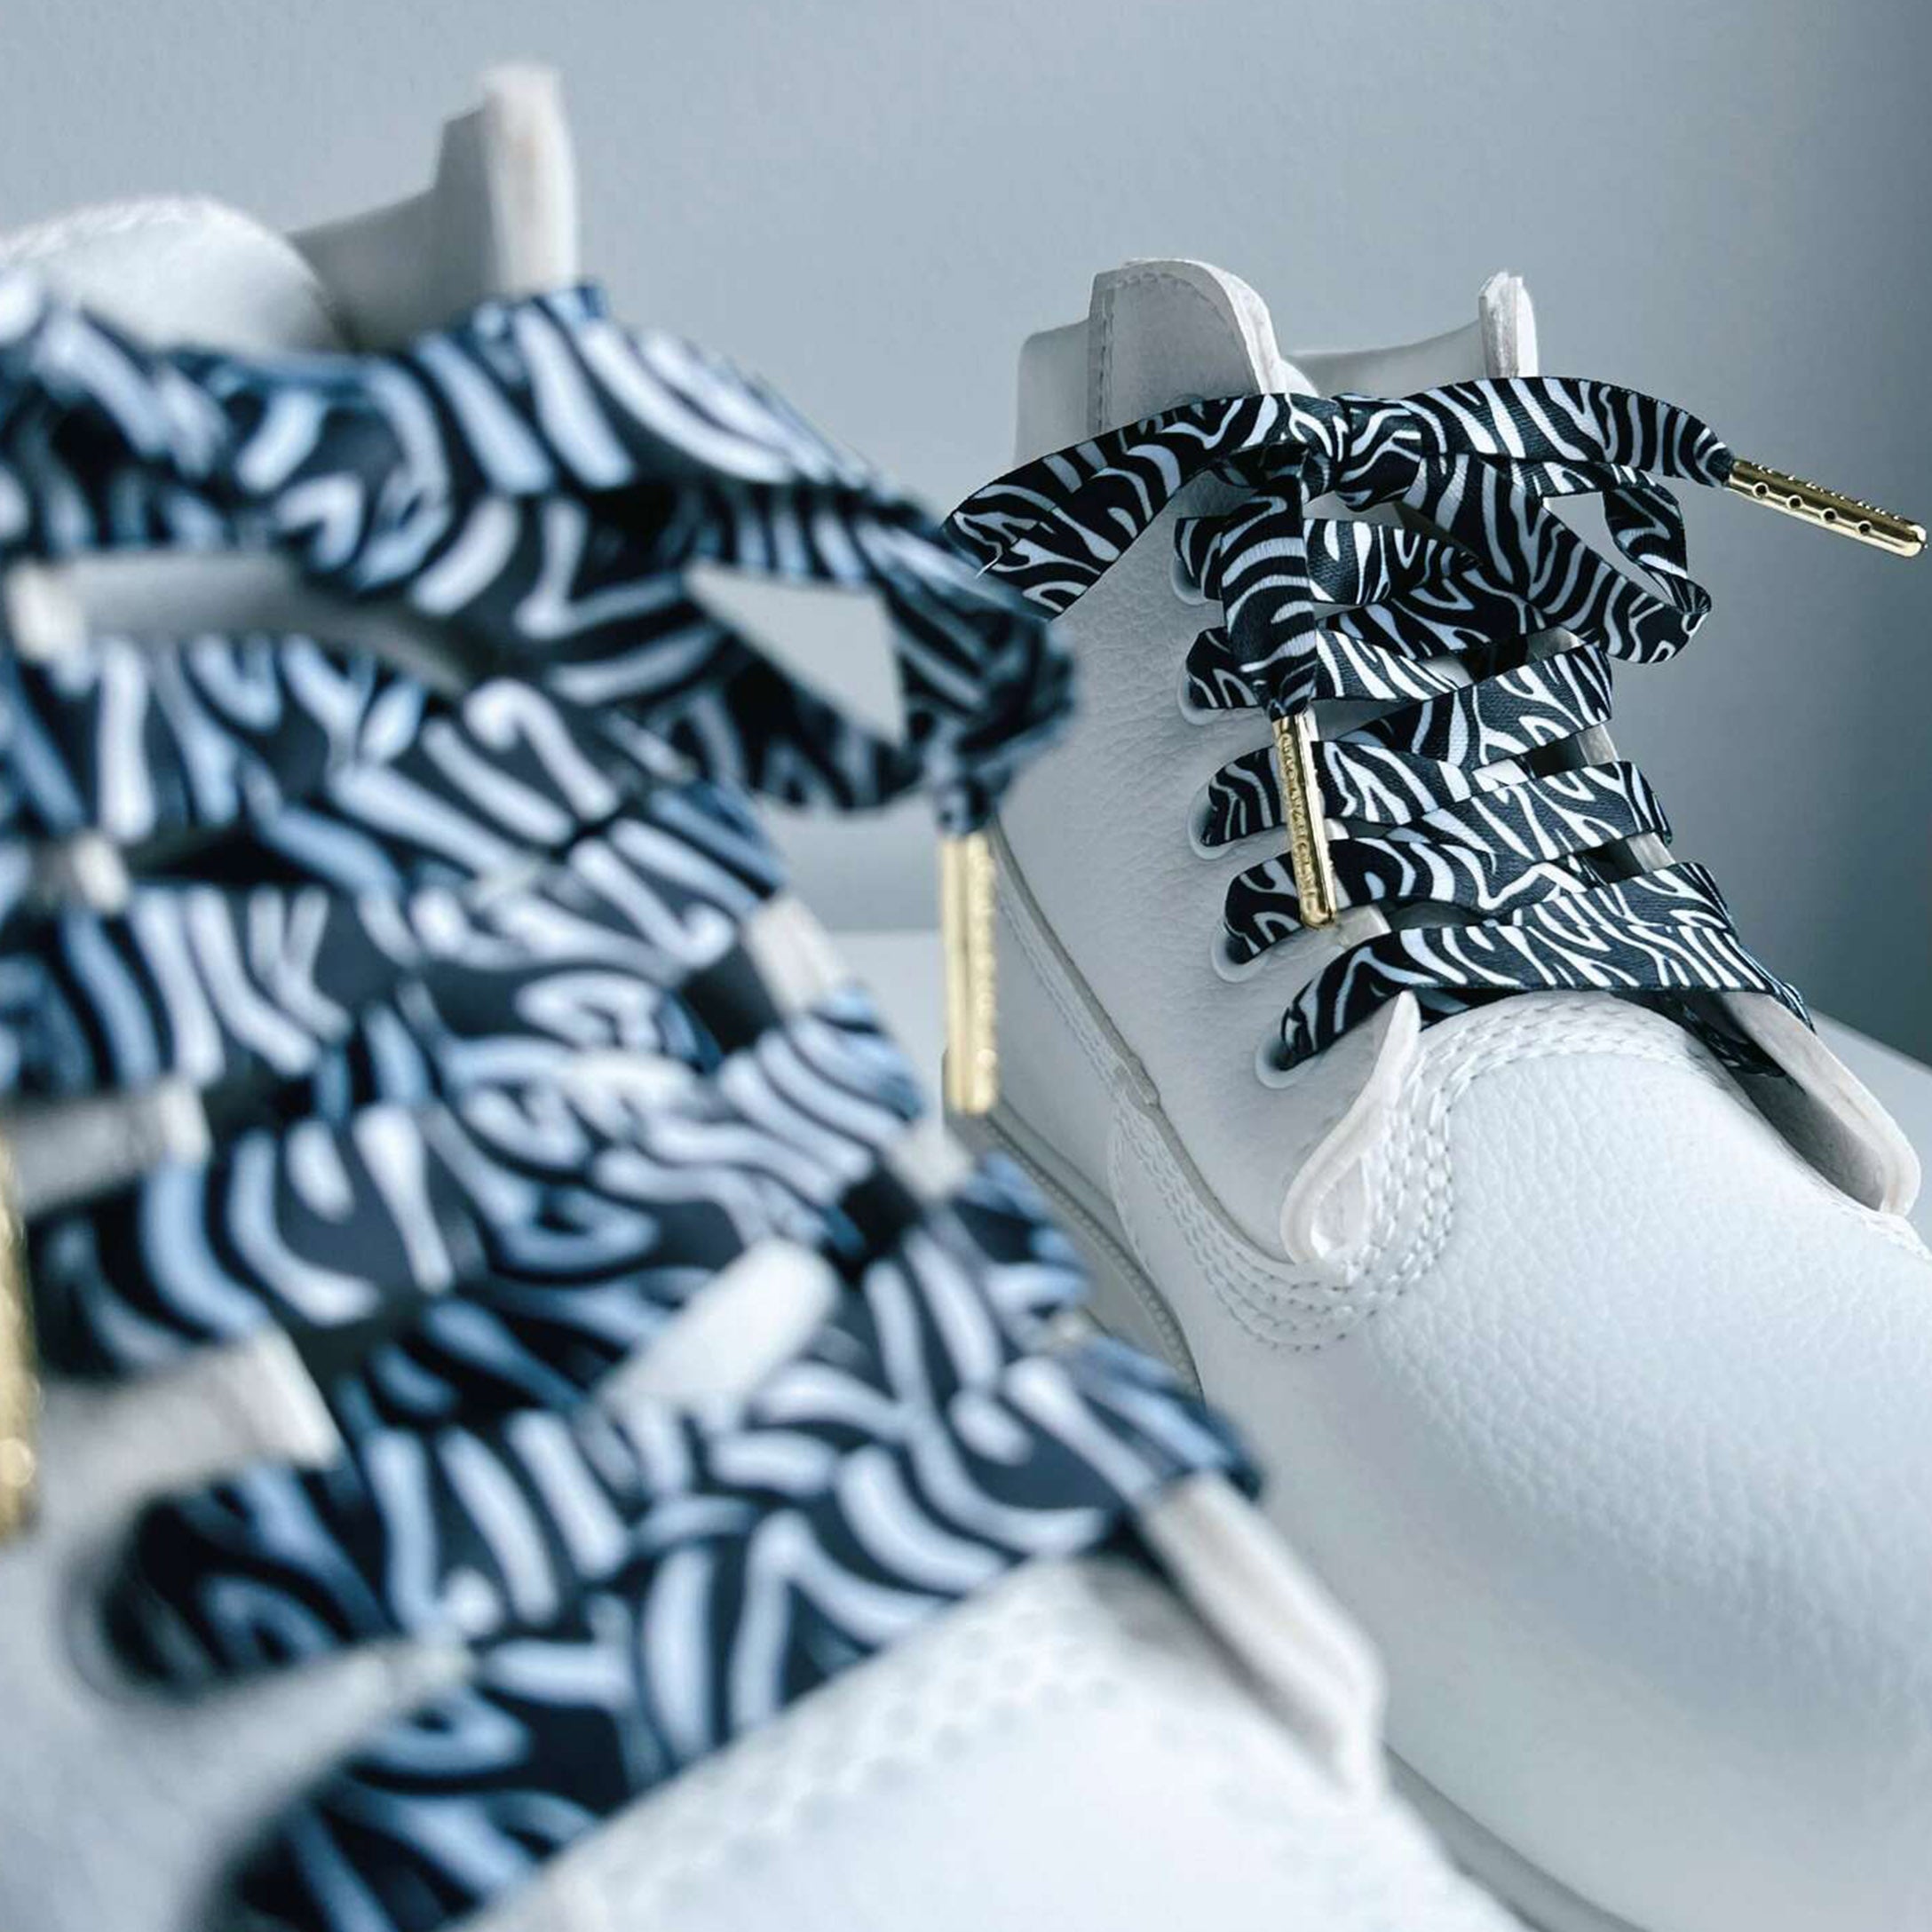 The Shoelace Brand Classic Zebra